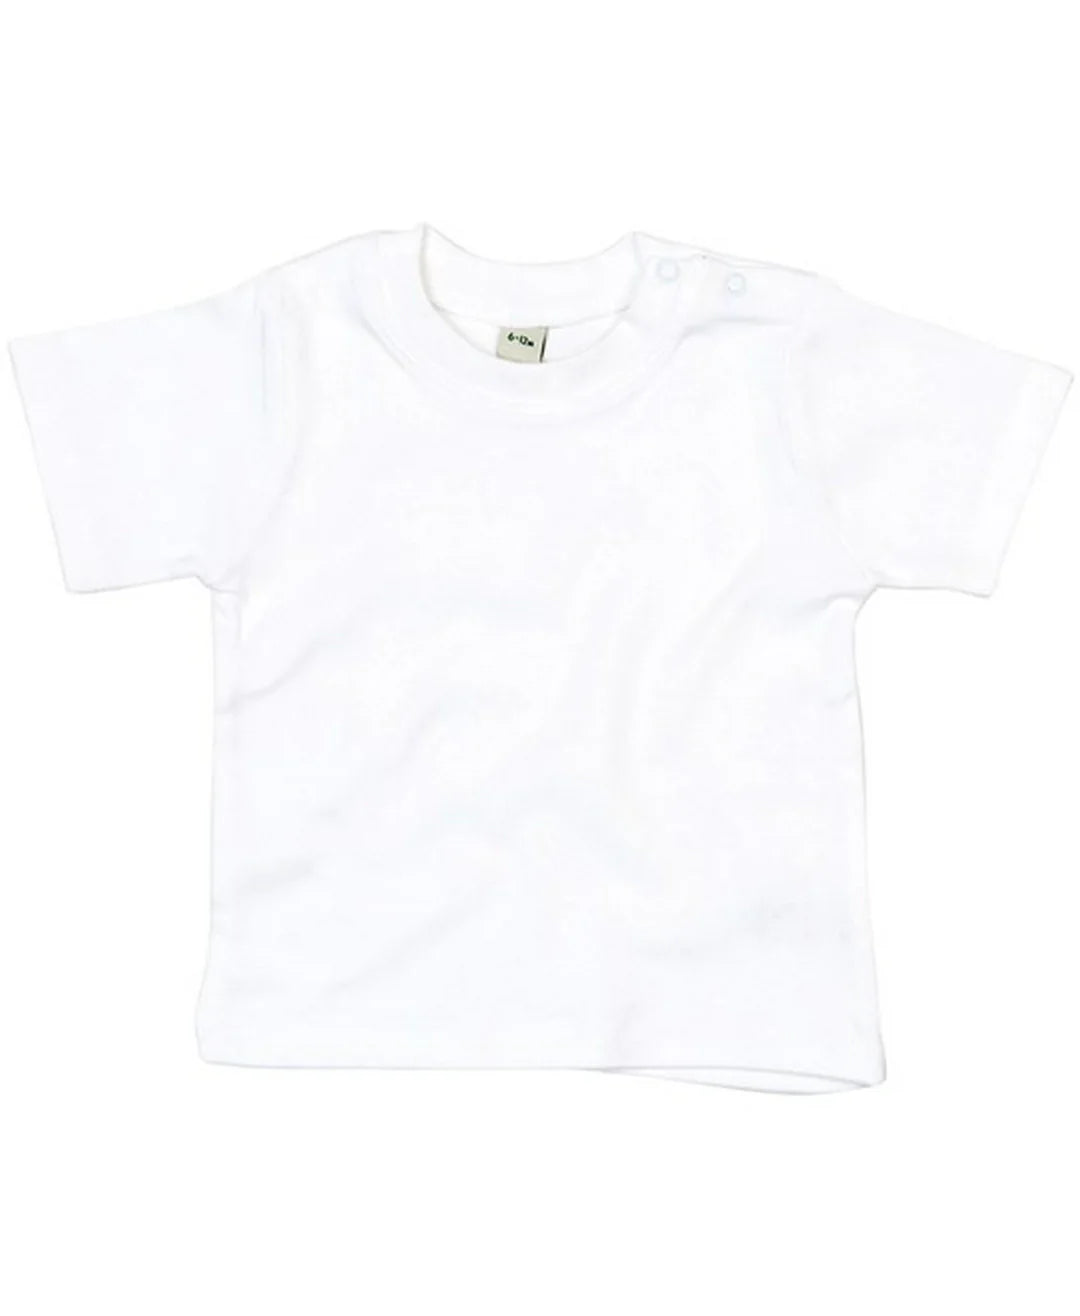 Babybugz Baby T-shirts Main color BZ02 - COOZO